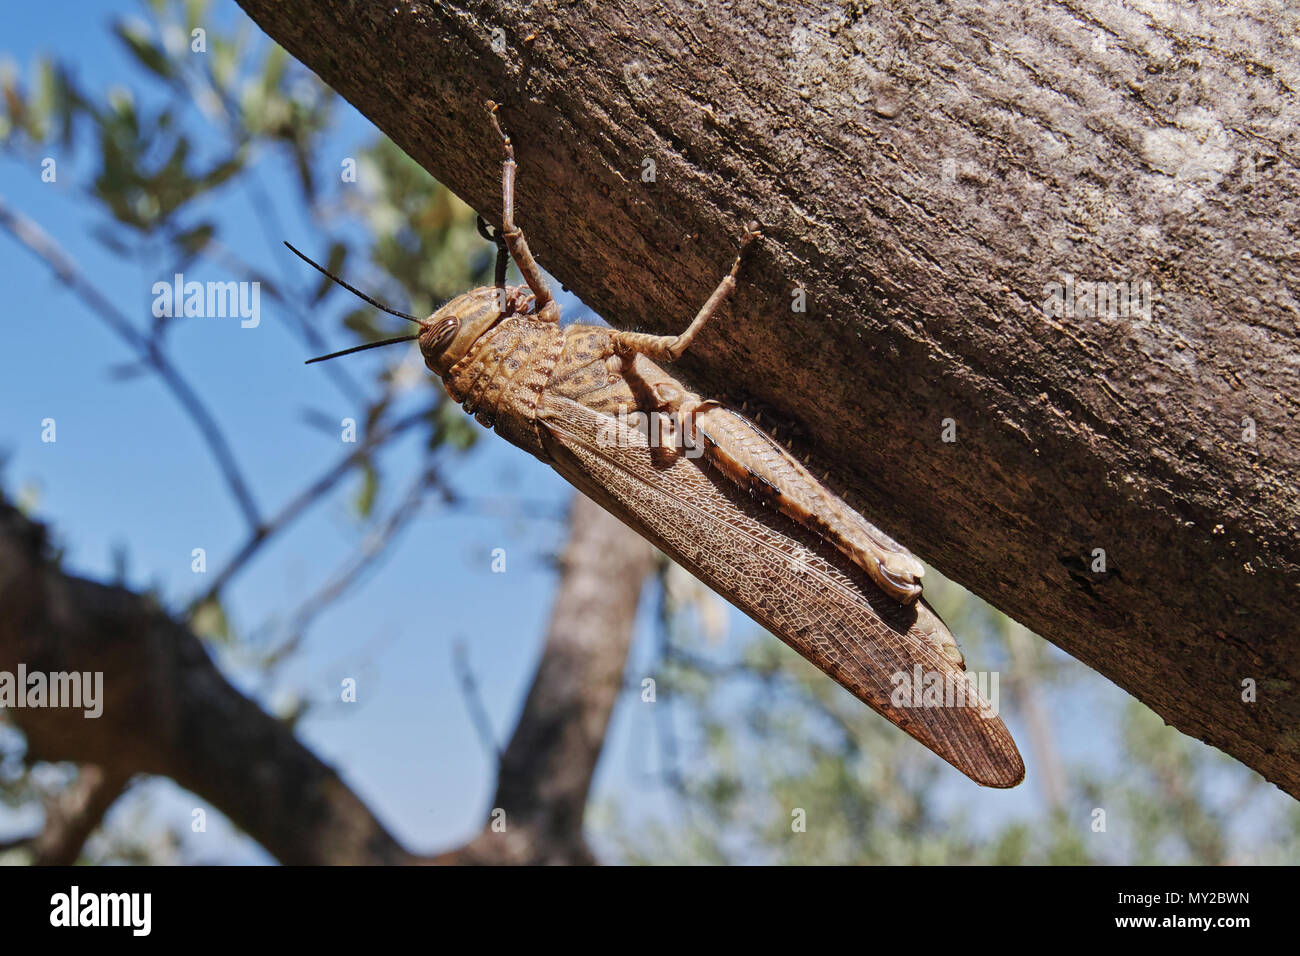 egyptian locust, grasshopper on a trunk Stock Photo